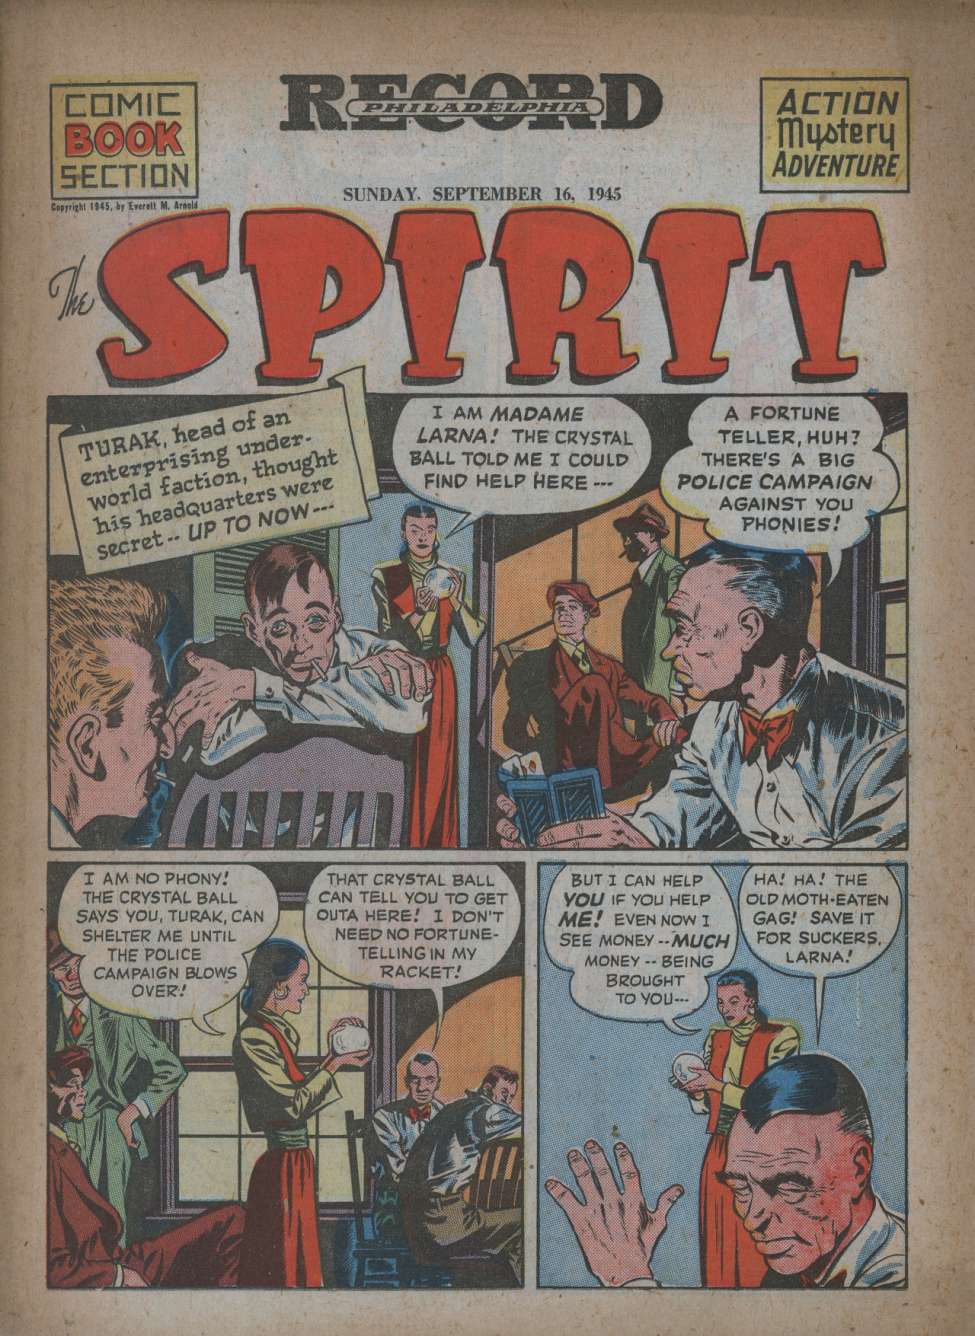 Comic Book Cover For The Spirit (1945-09-16) - Philadelphia Record